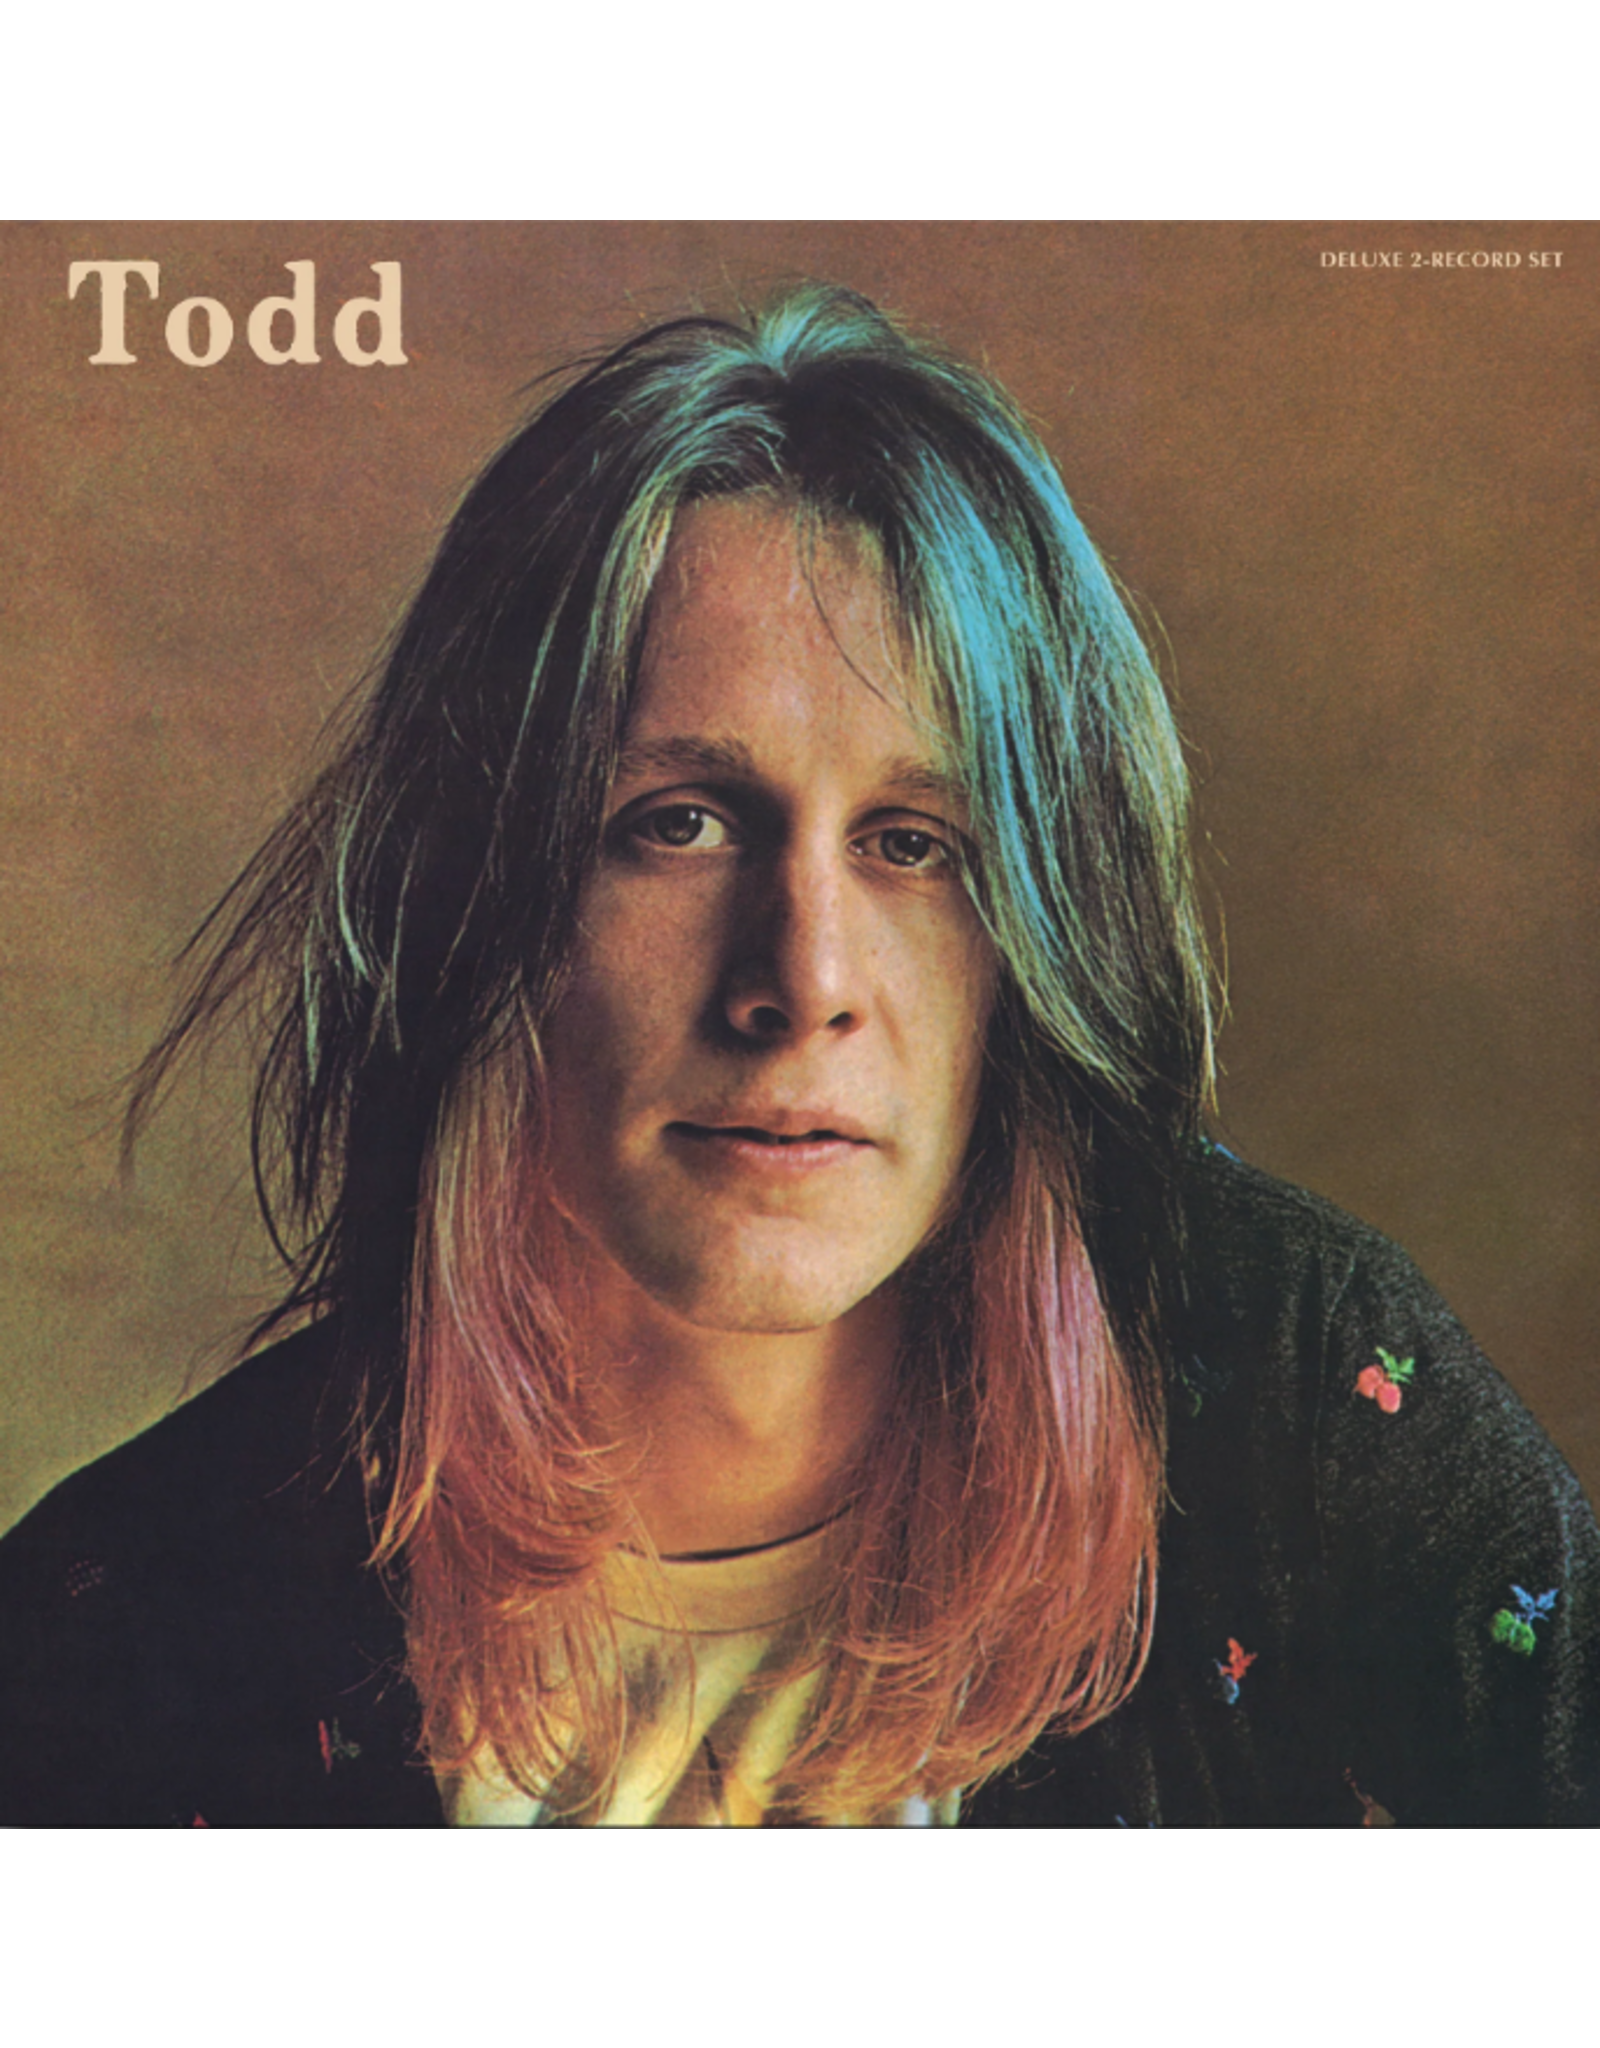 Todd Rundgren - Todd (Record Store Day) [Green / Orange Vinyl]